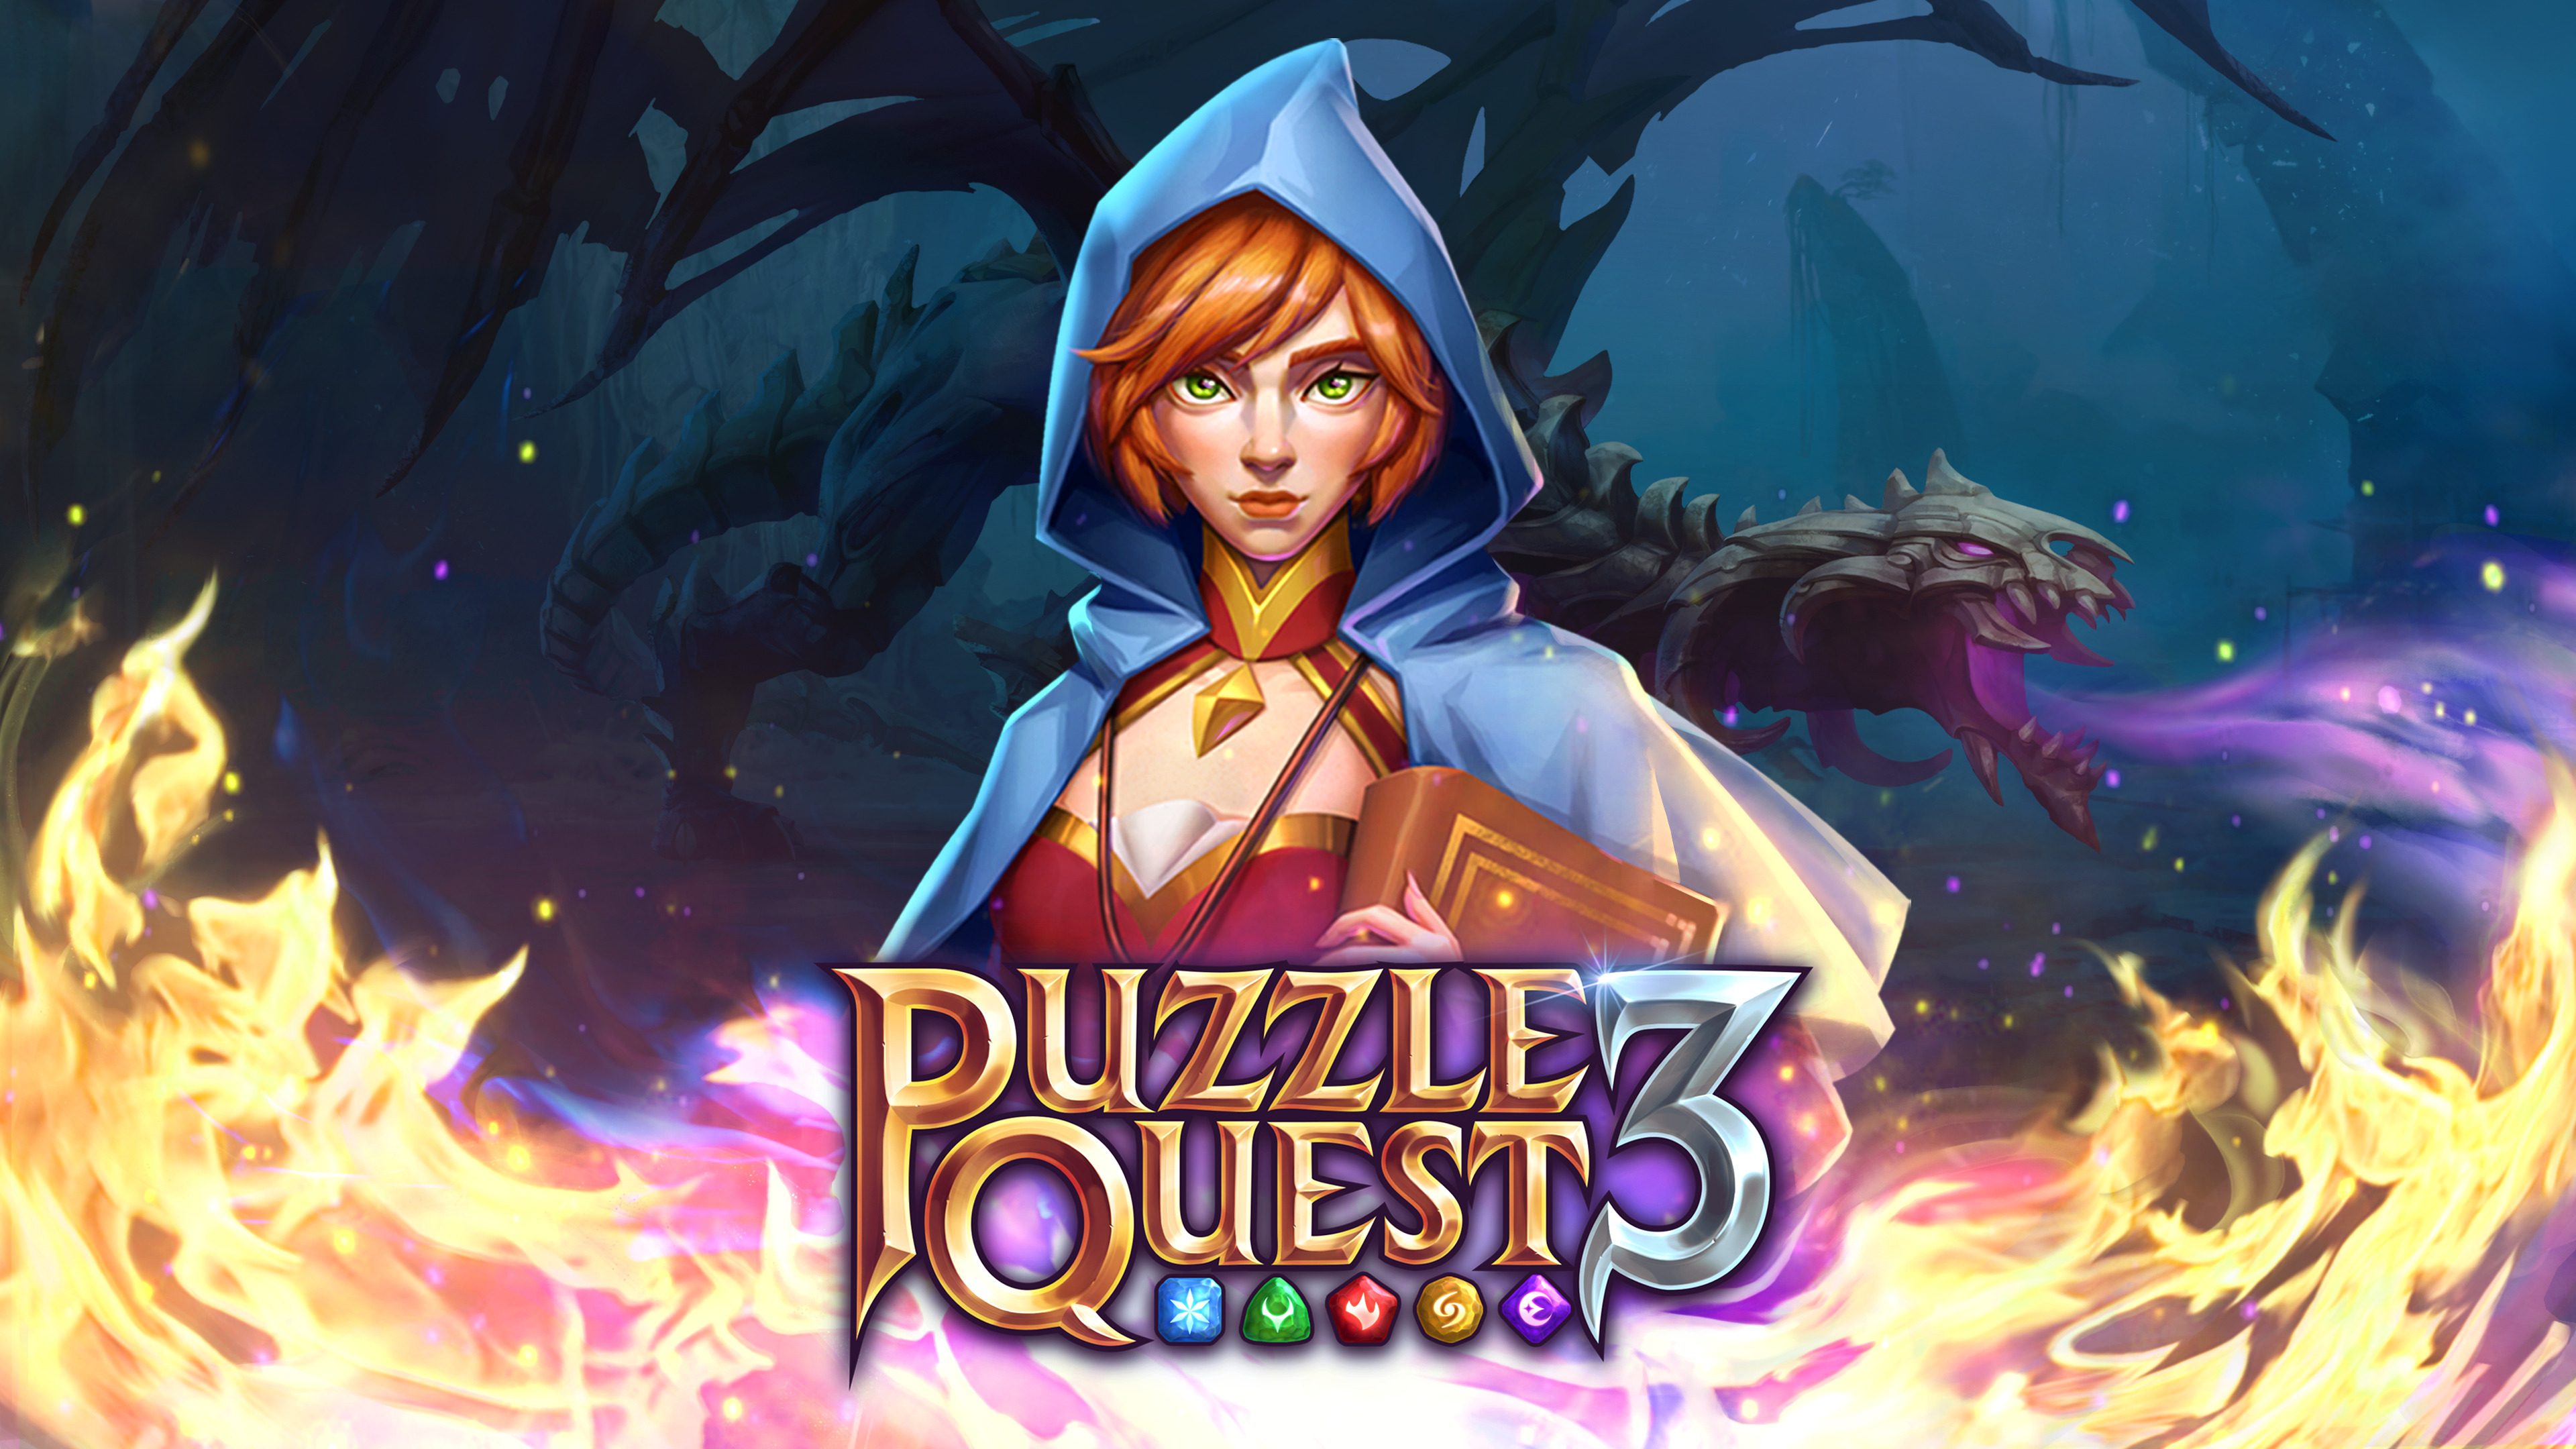 Puzzle Quest 3 launches March 1 - Gematsu